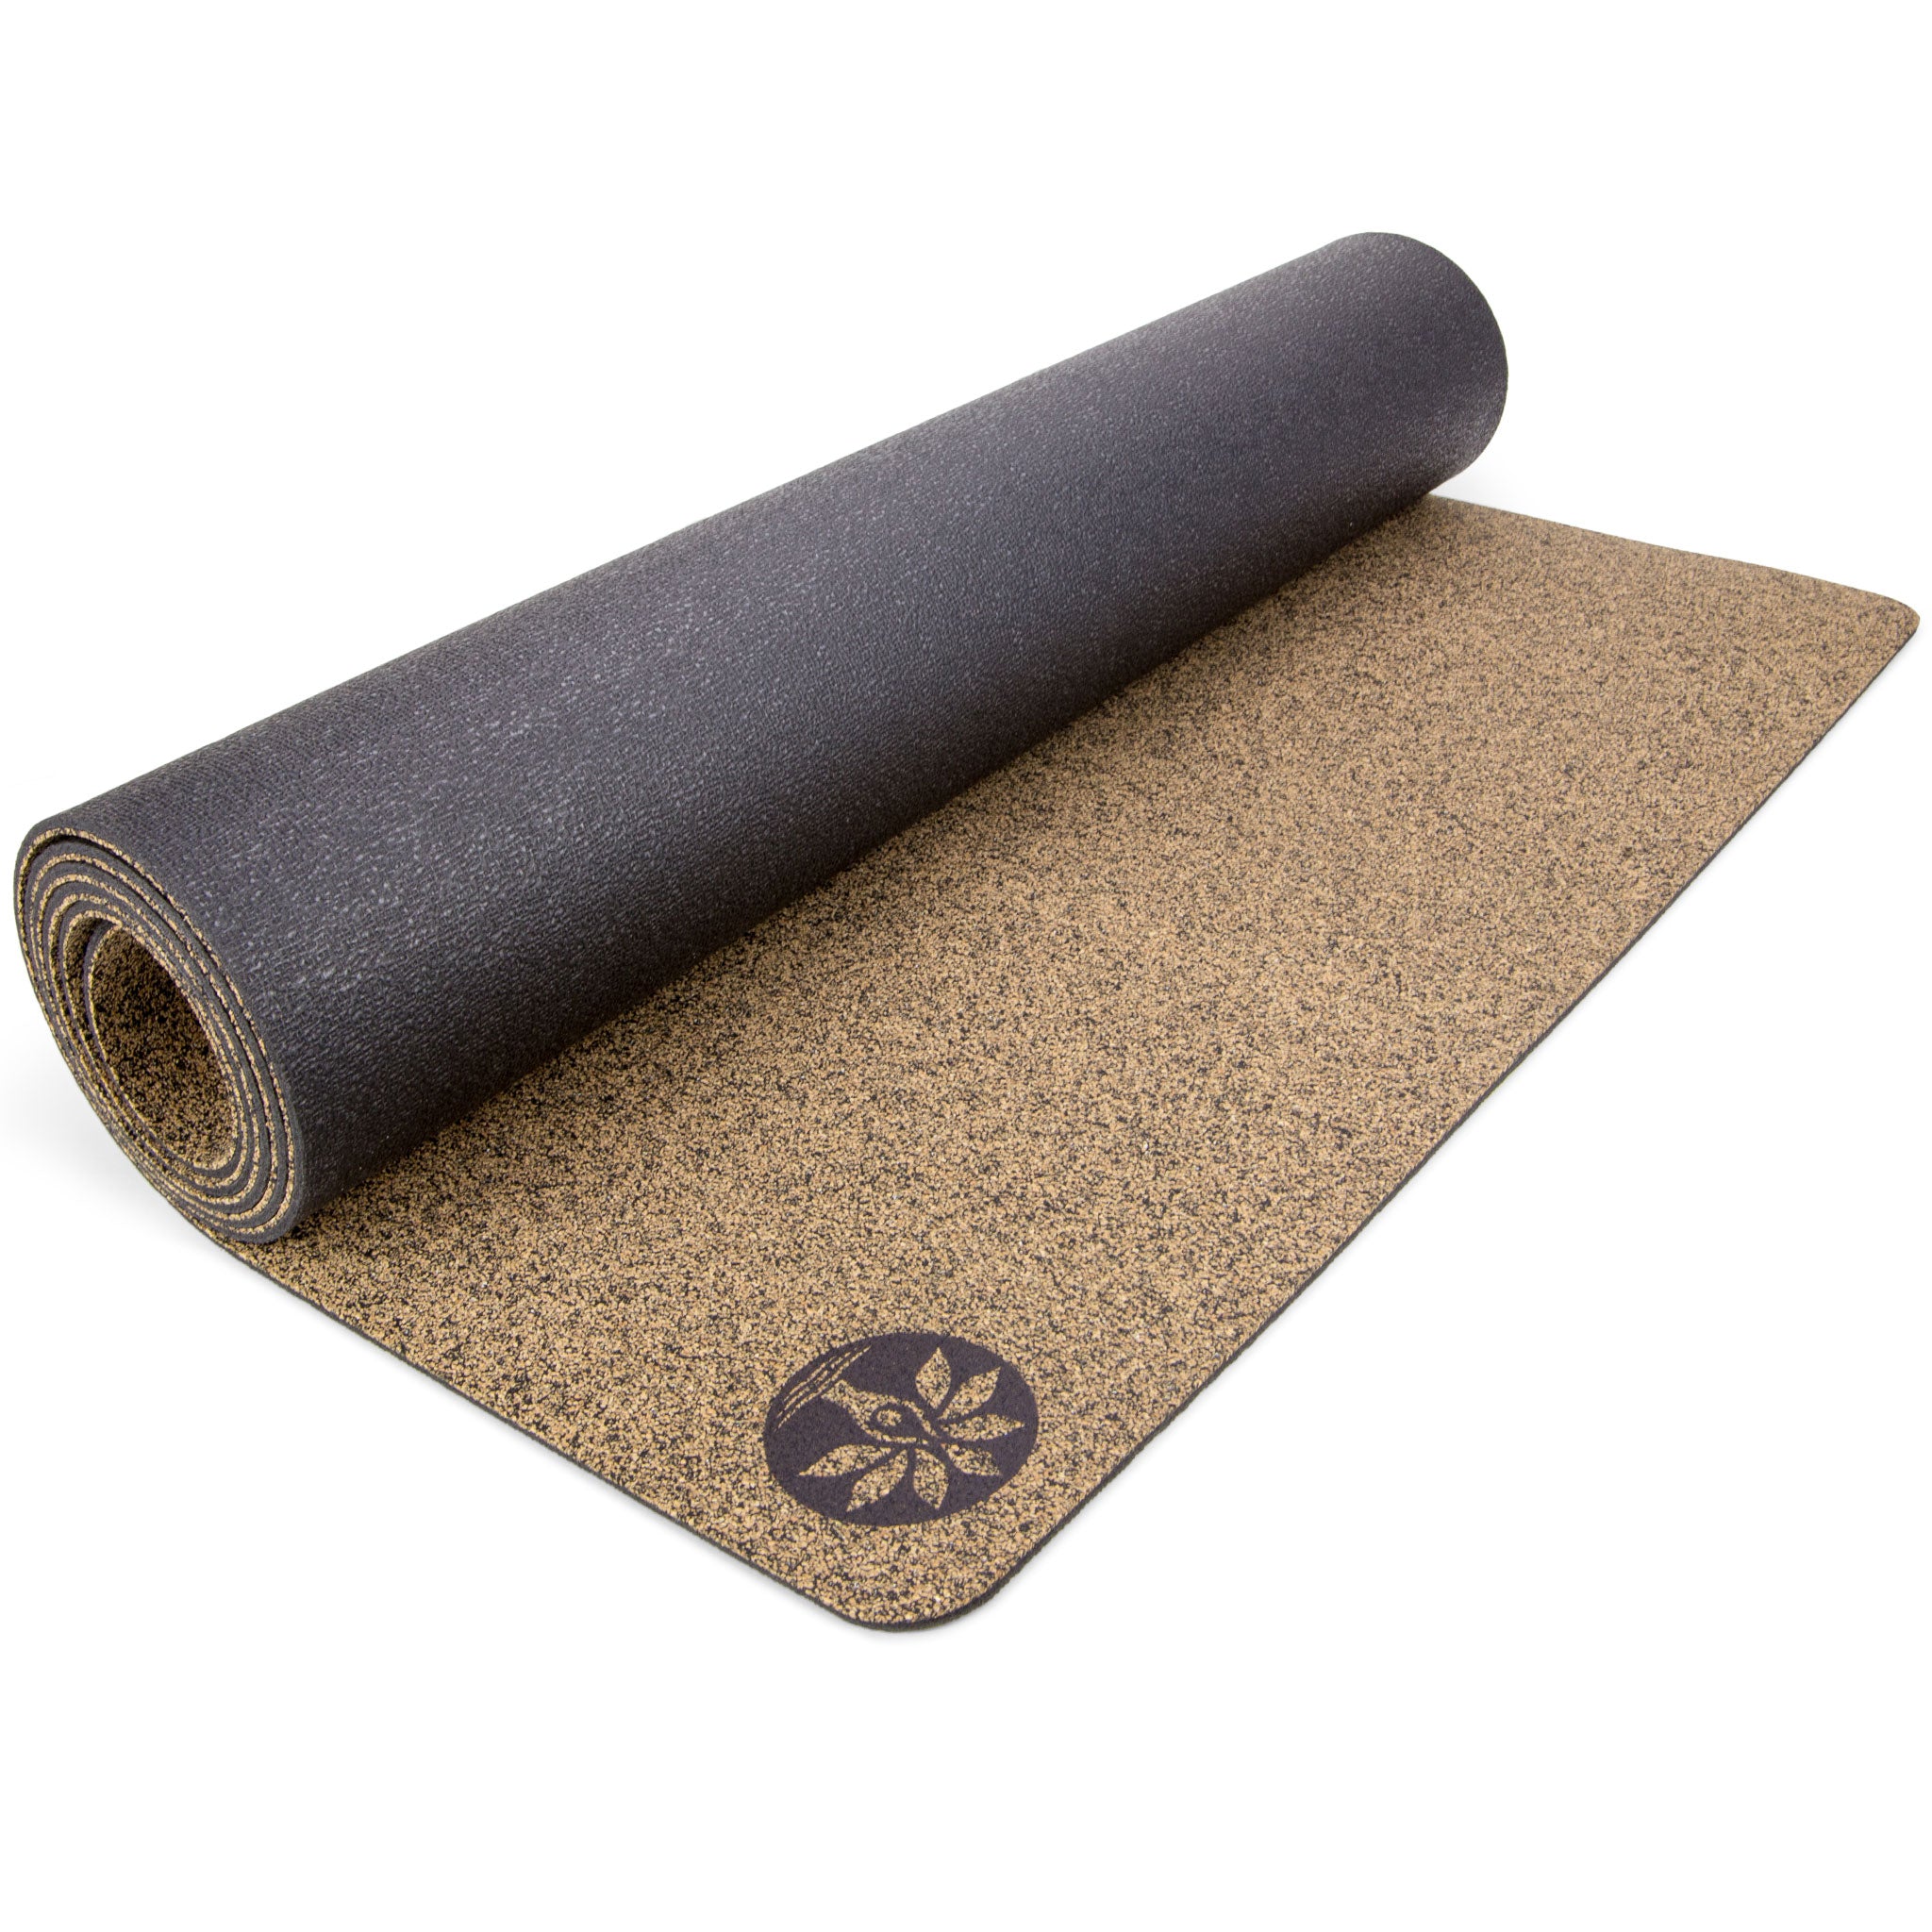 The Best Non-Slip Cork Yoga Mat - Unity Cork Mat